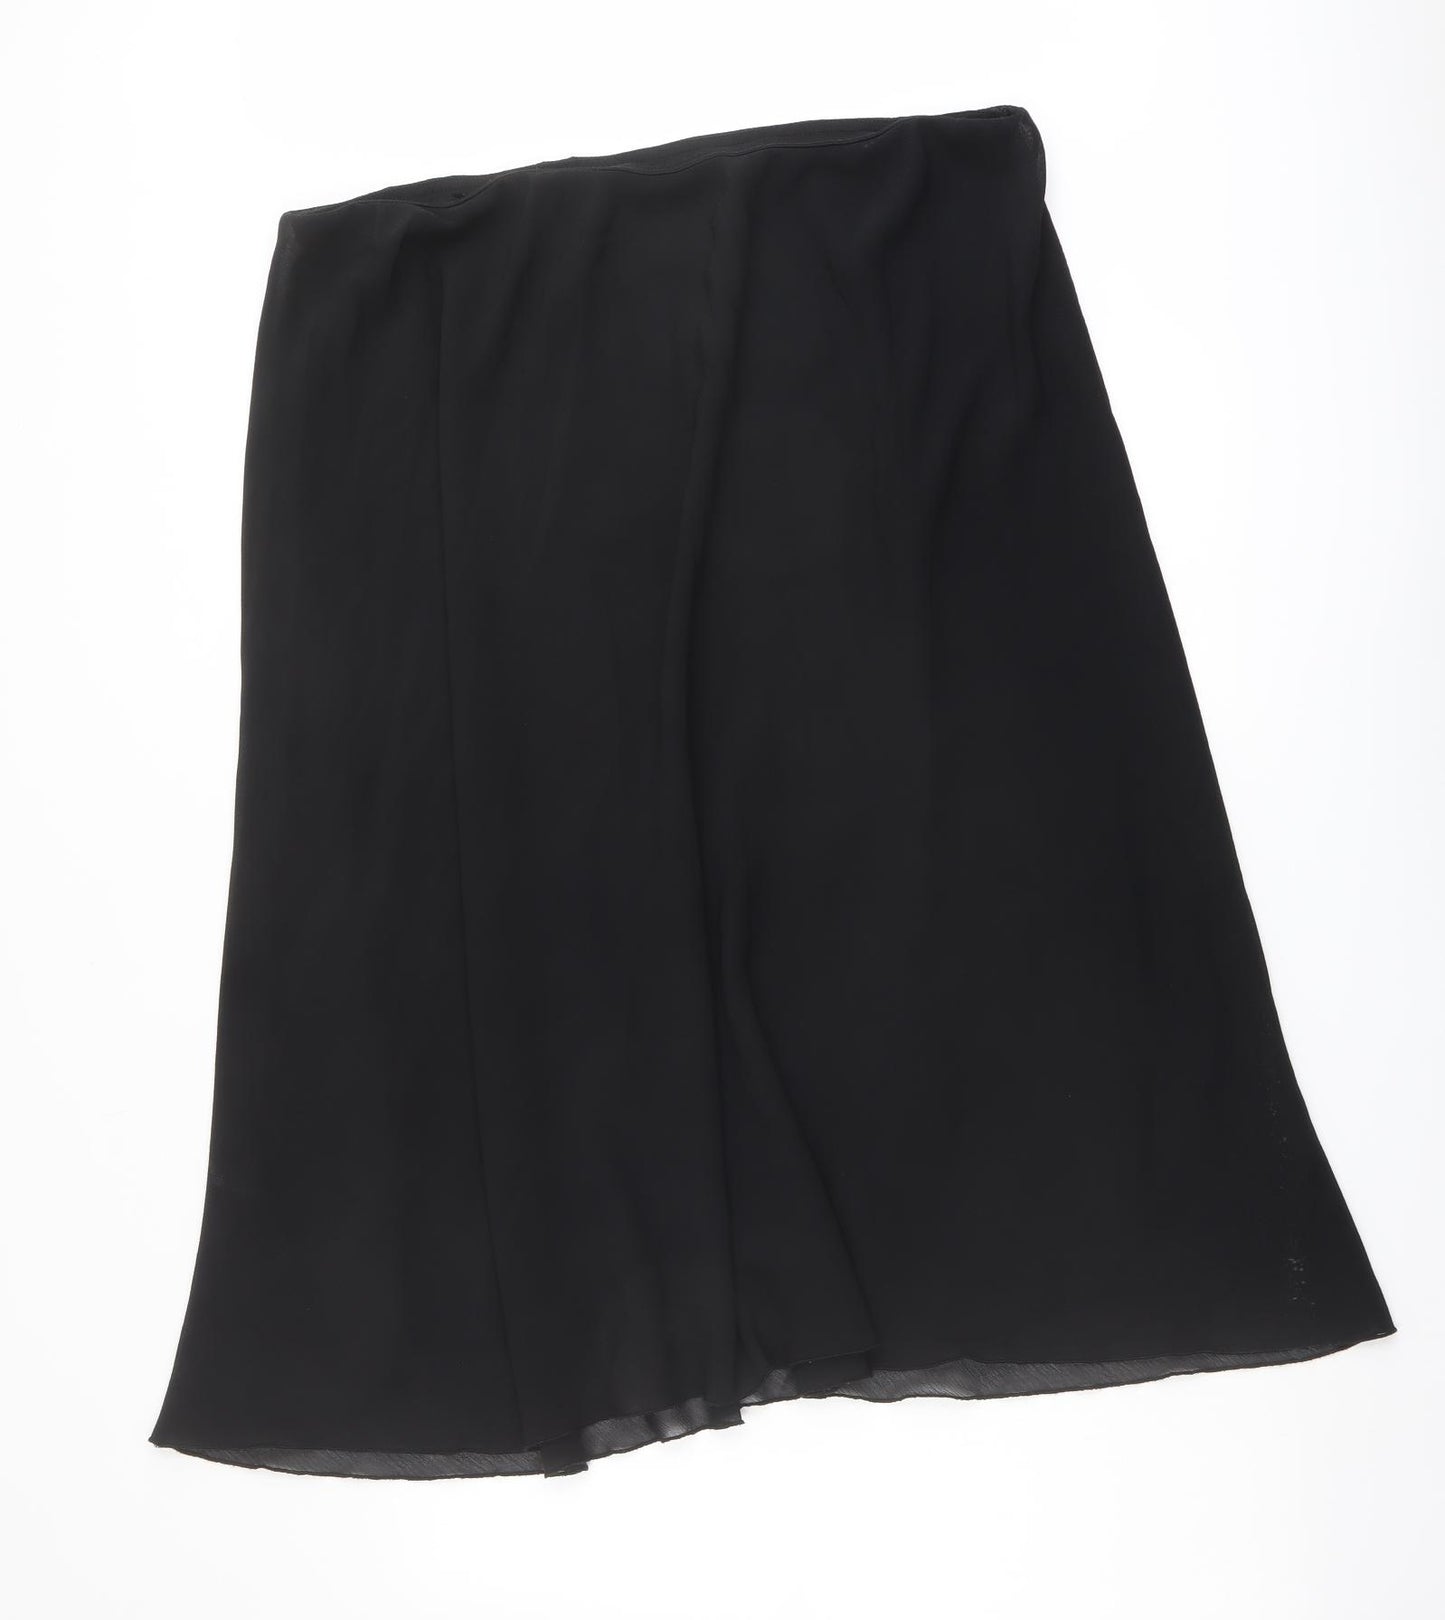 Bonmarché Womens Black Polyester Swing Skirt Size 20